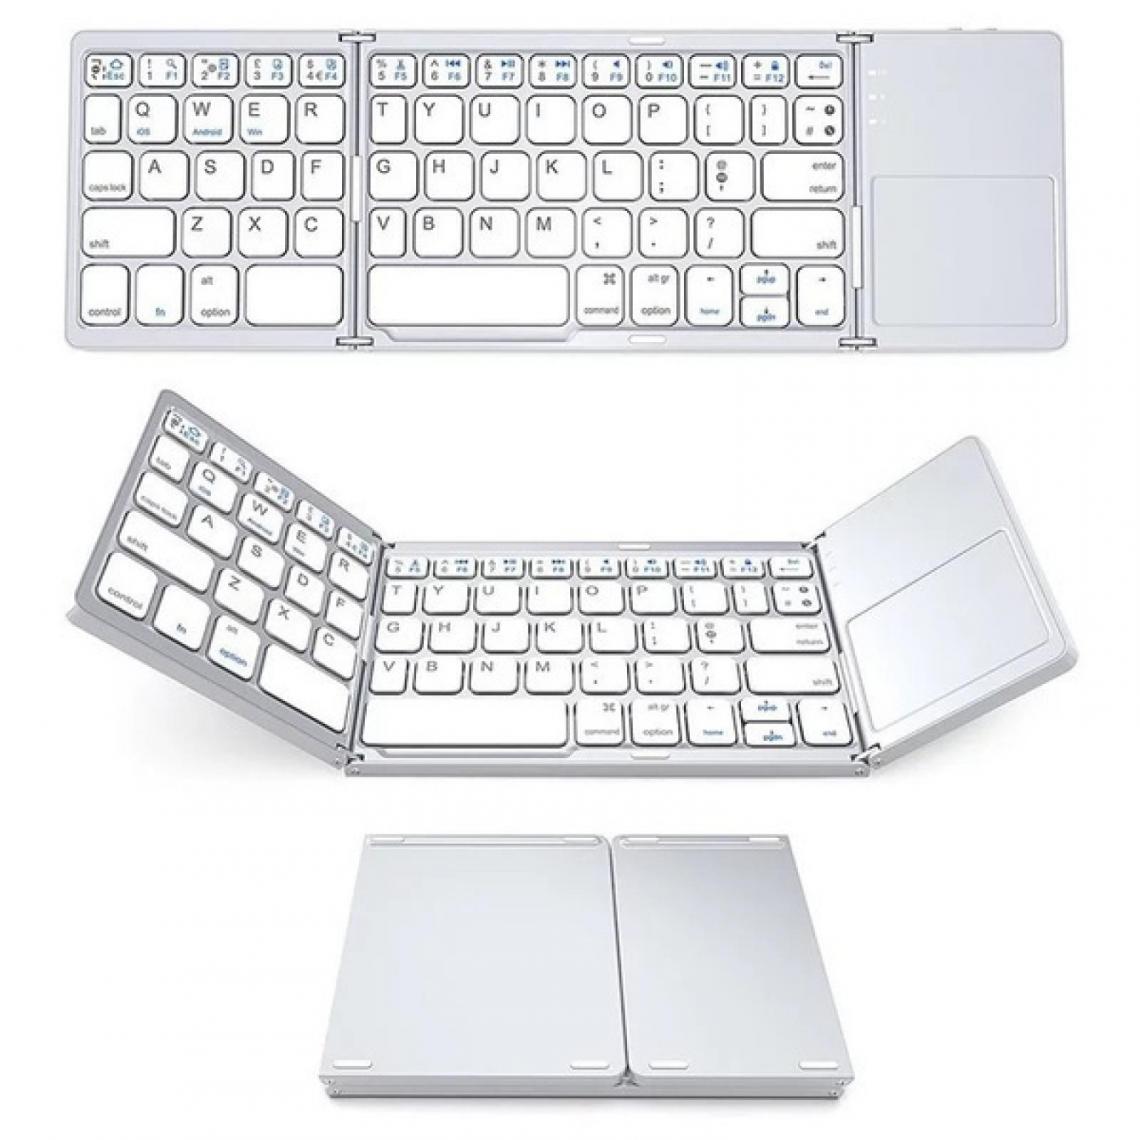 Gengyouyuan - Le clavier sans fil Bluetooth Mini Office Triple Folding Keyboard prend en charge trois systèmes - Clavier